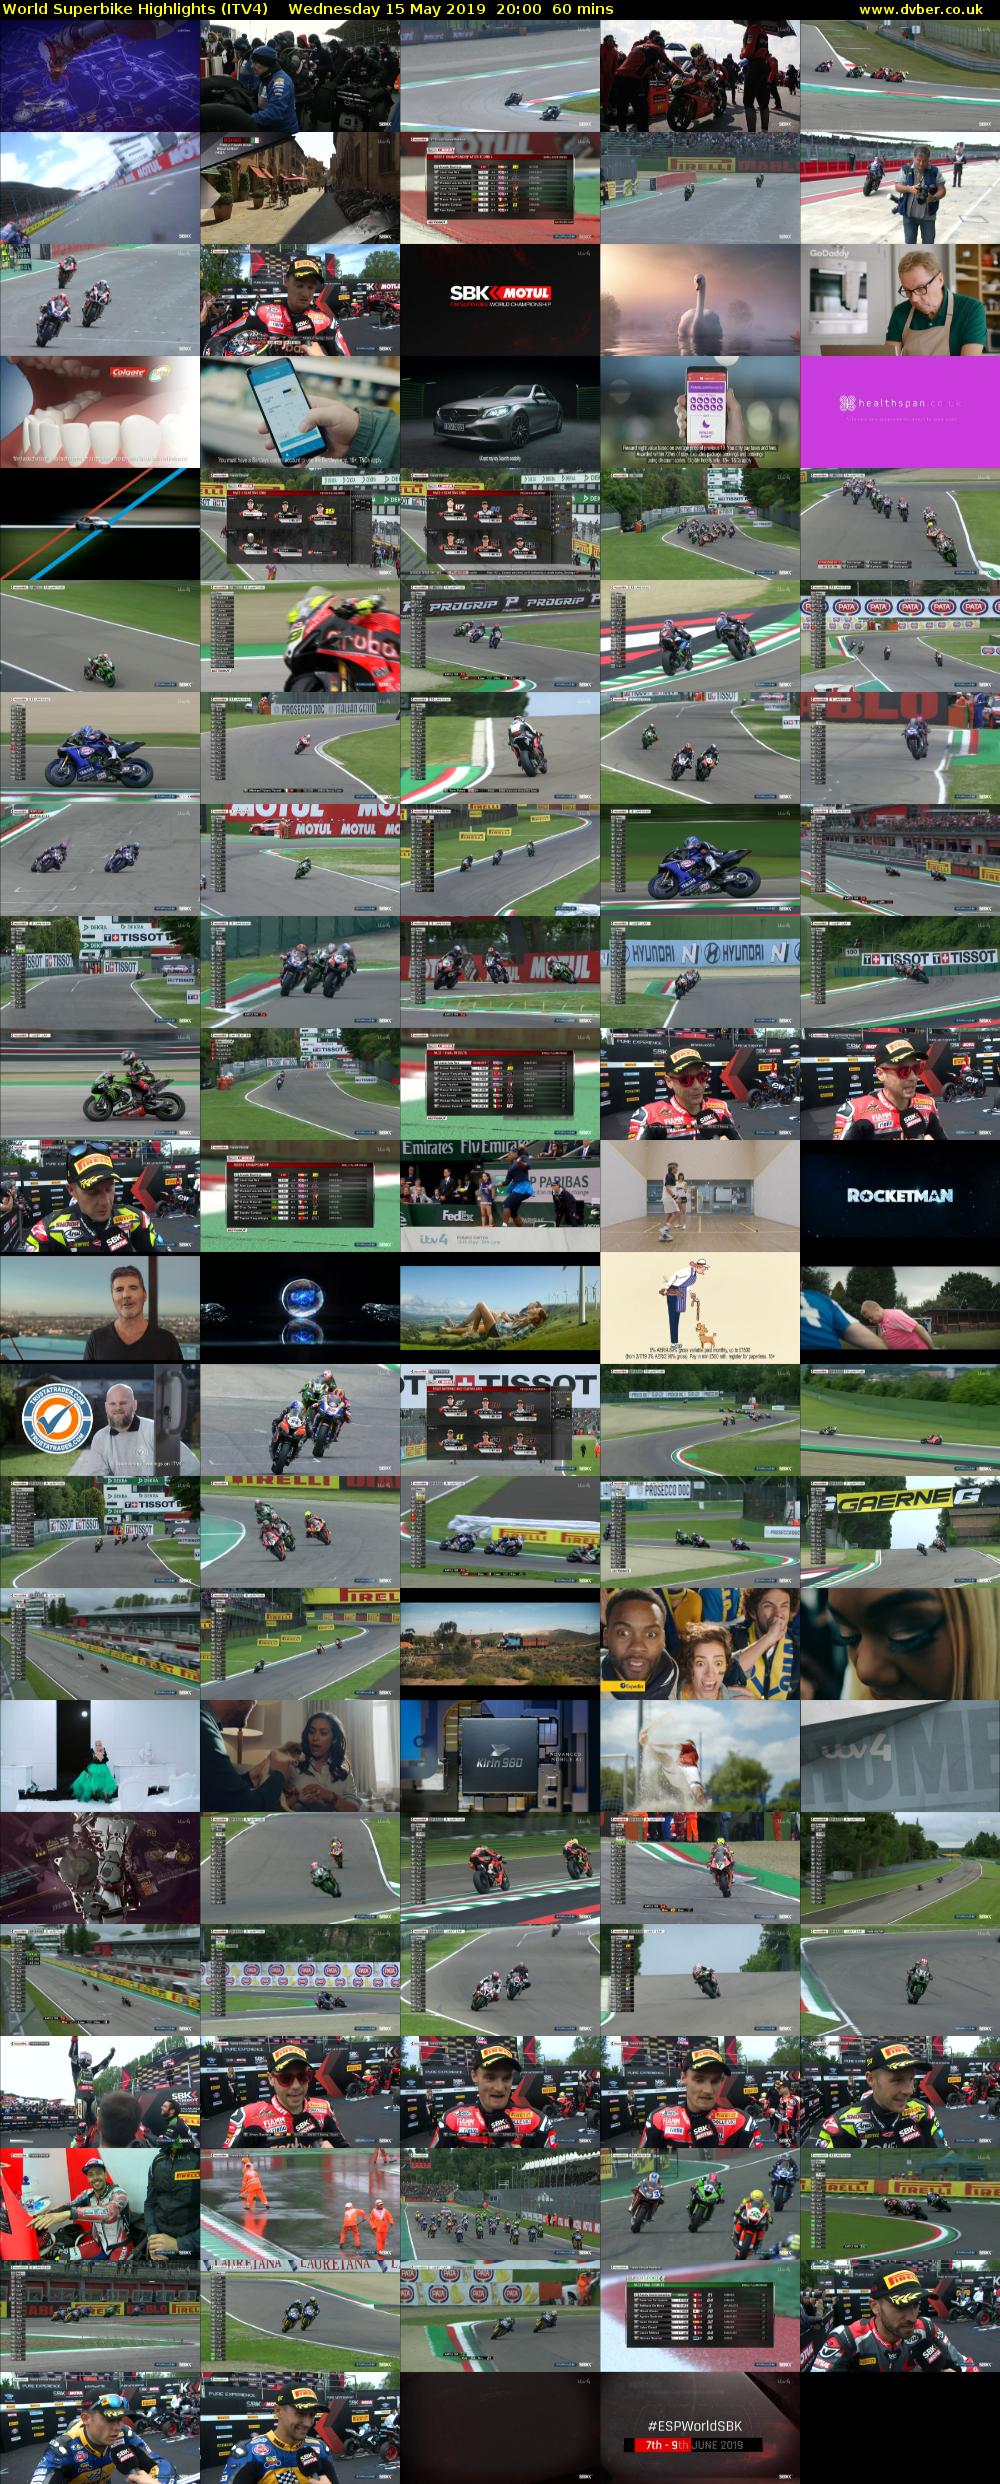 World Superbike Highlights (ITV4) Wednesday 15 May 2019 20:00 - 21:00